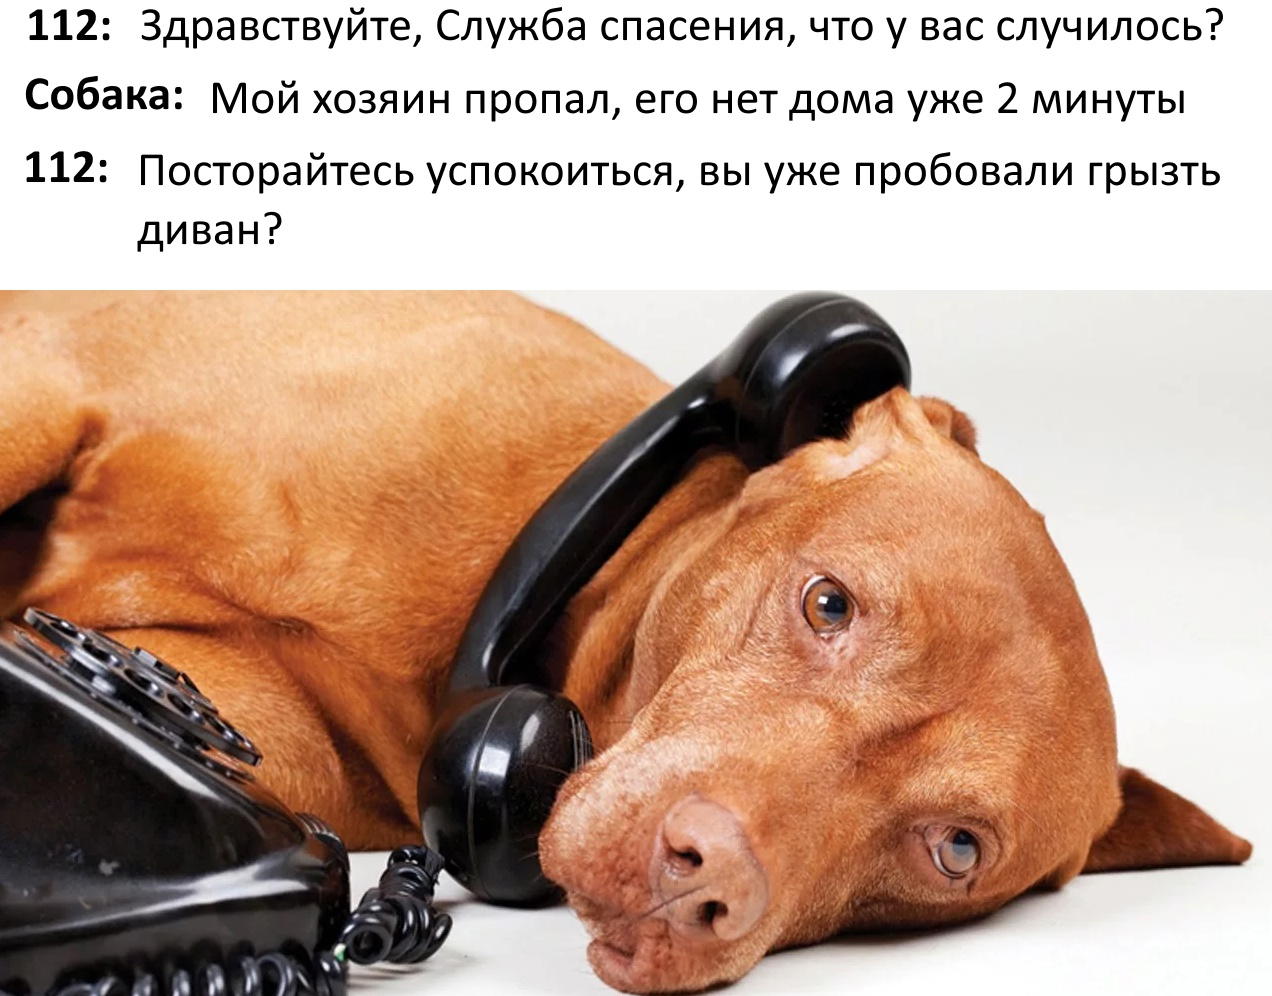 Собака разговаривает по телефону